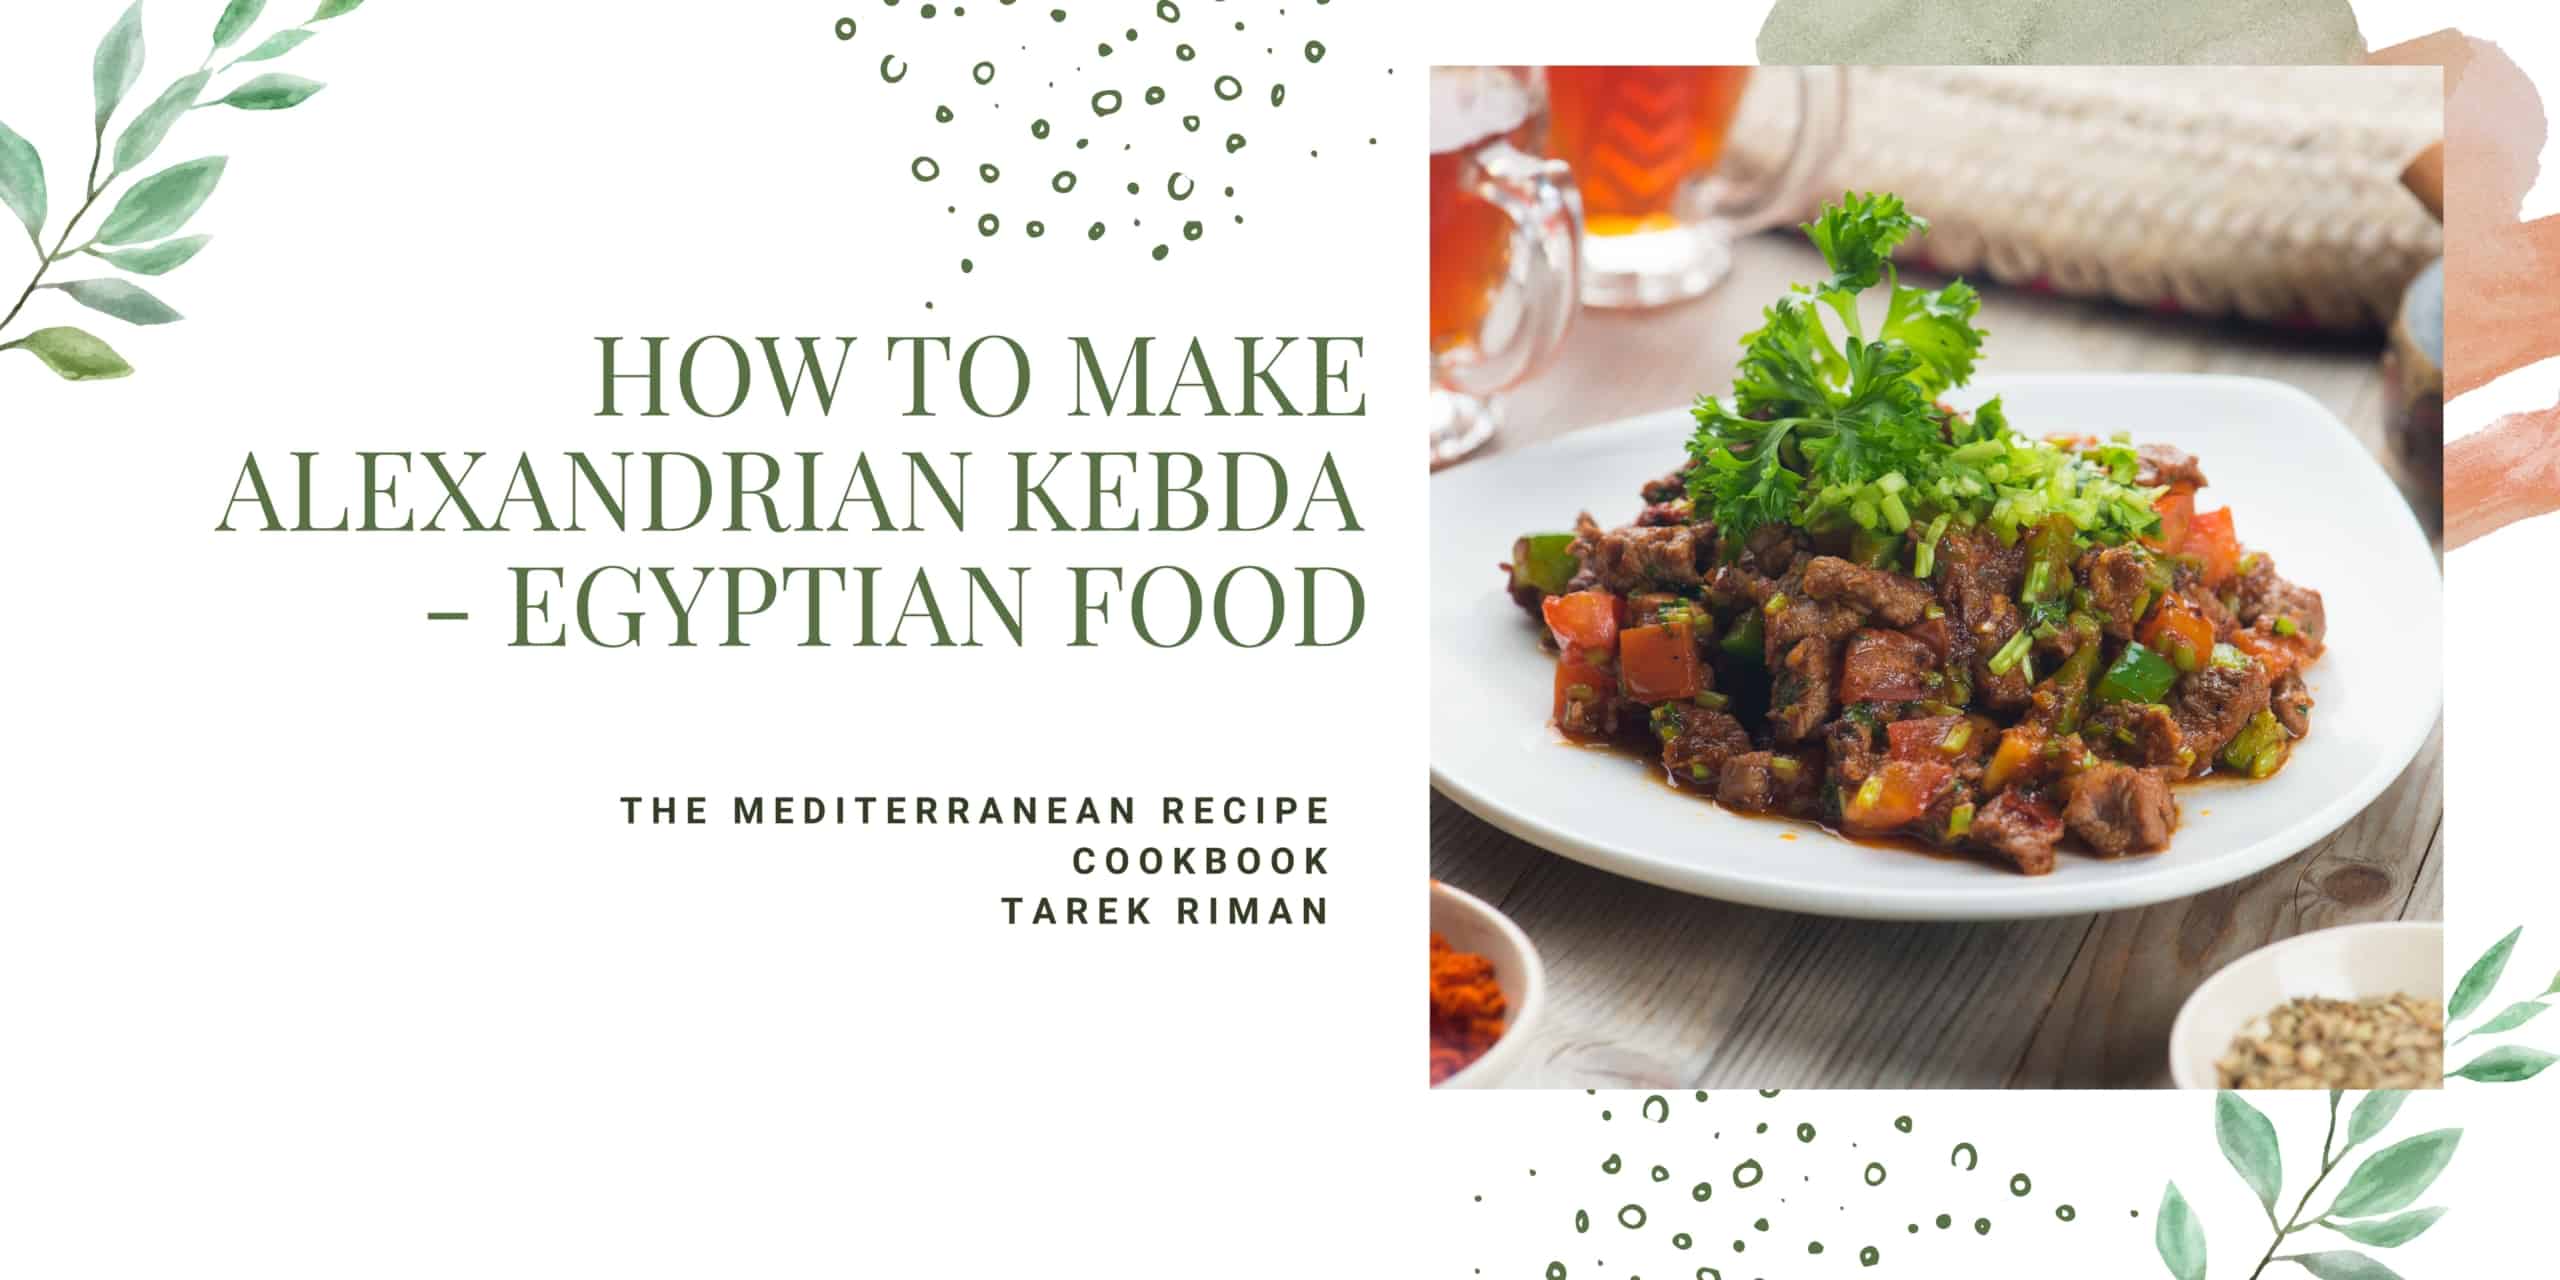 How to make Alexandrian Kebda - Egyptian food